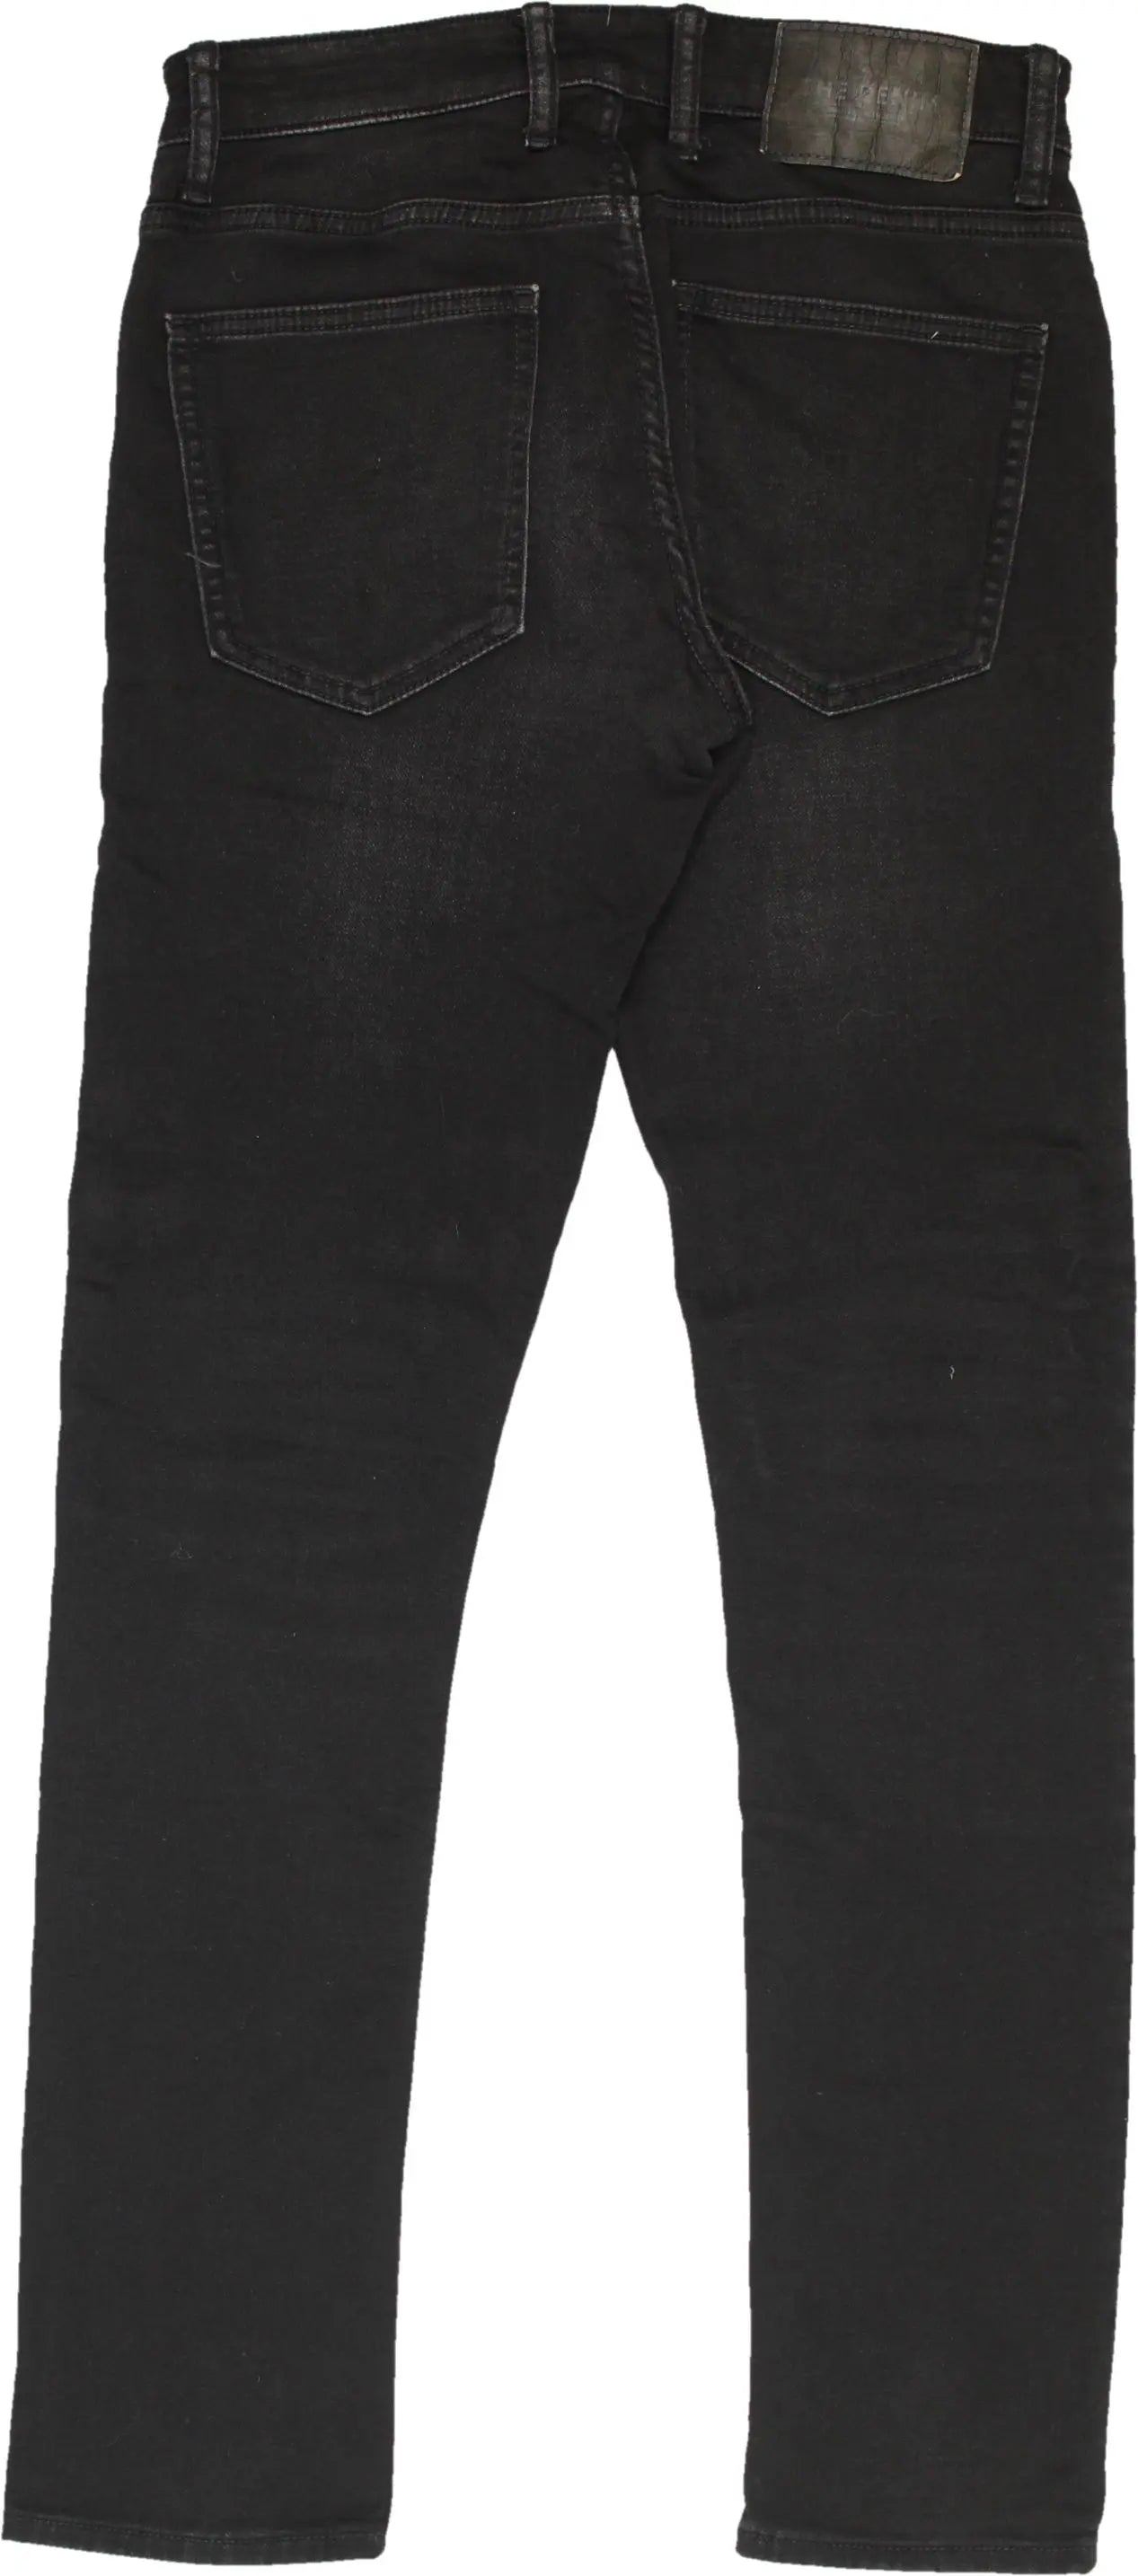 C&A - Jog Denim Slim Fit Jeans- ThriftTale.com - Vintage and second handclothing